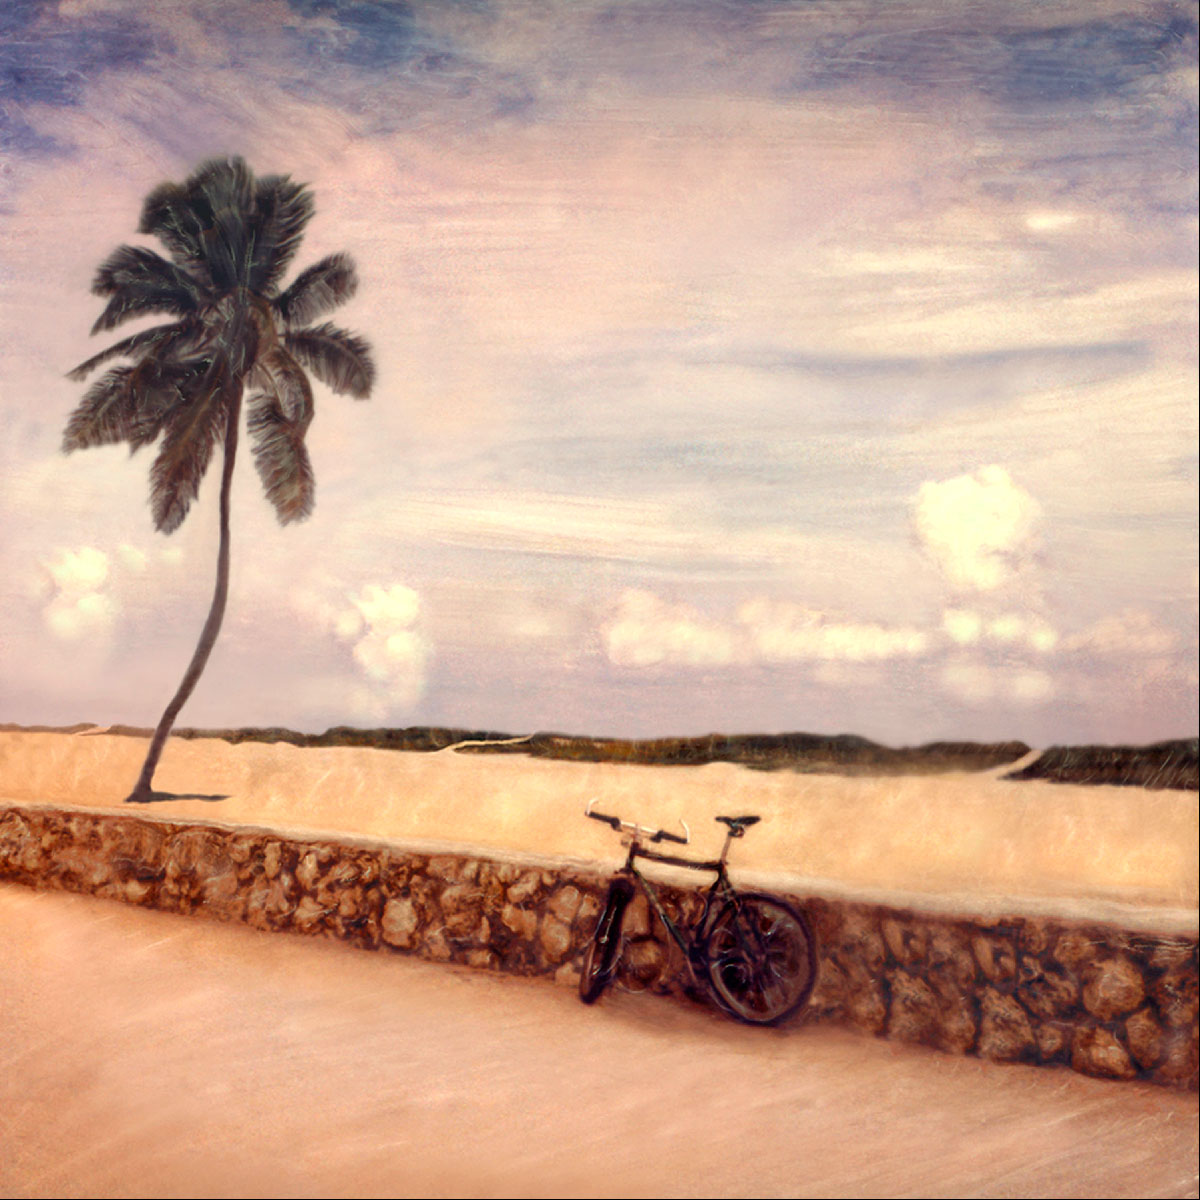 "Solitude" <br> Bike, Stone Wall, Dunes and Palm Tree, Miami Beach, FL